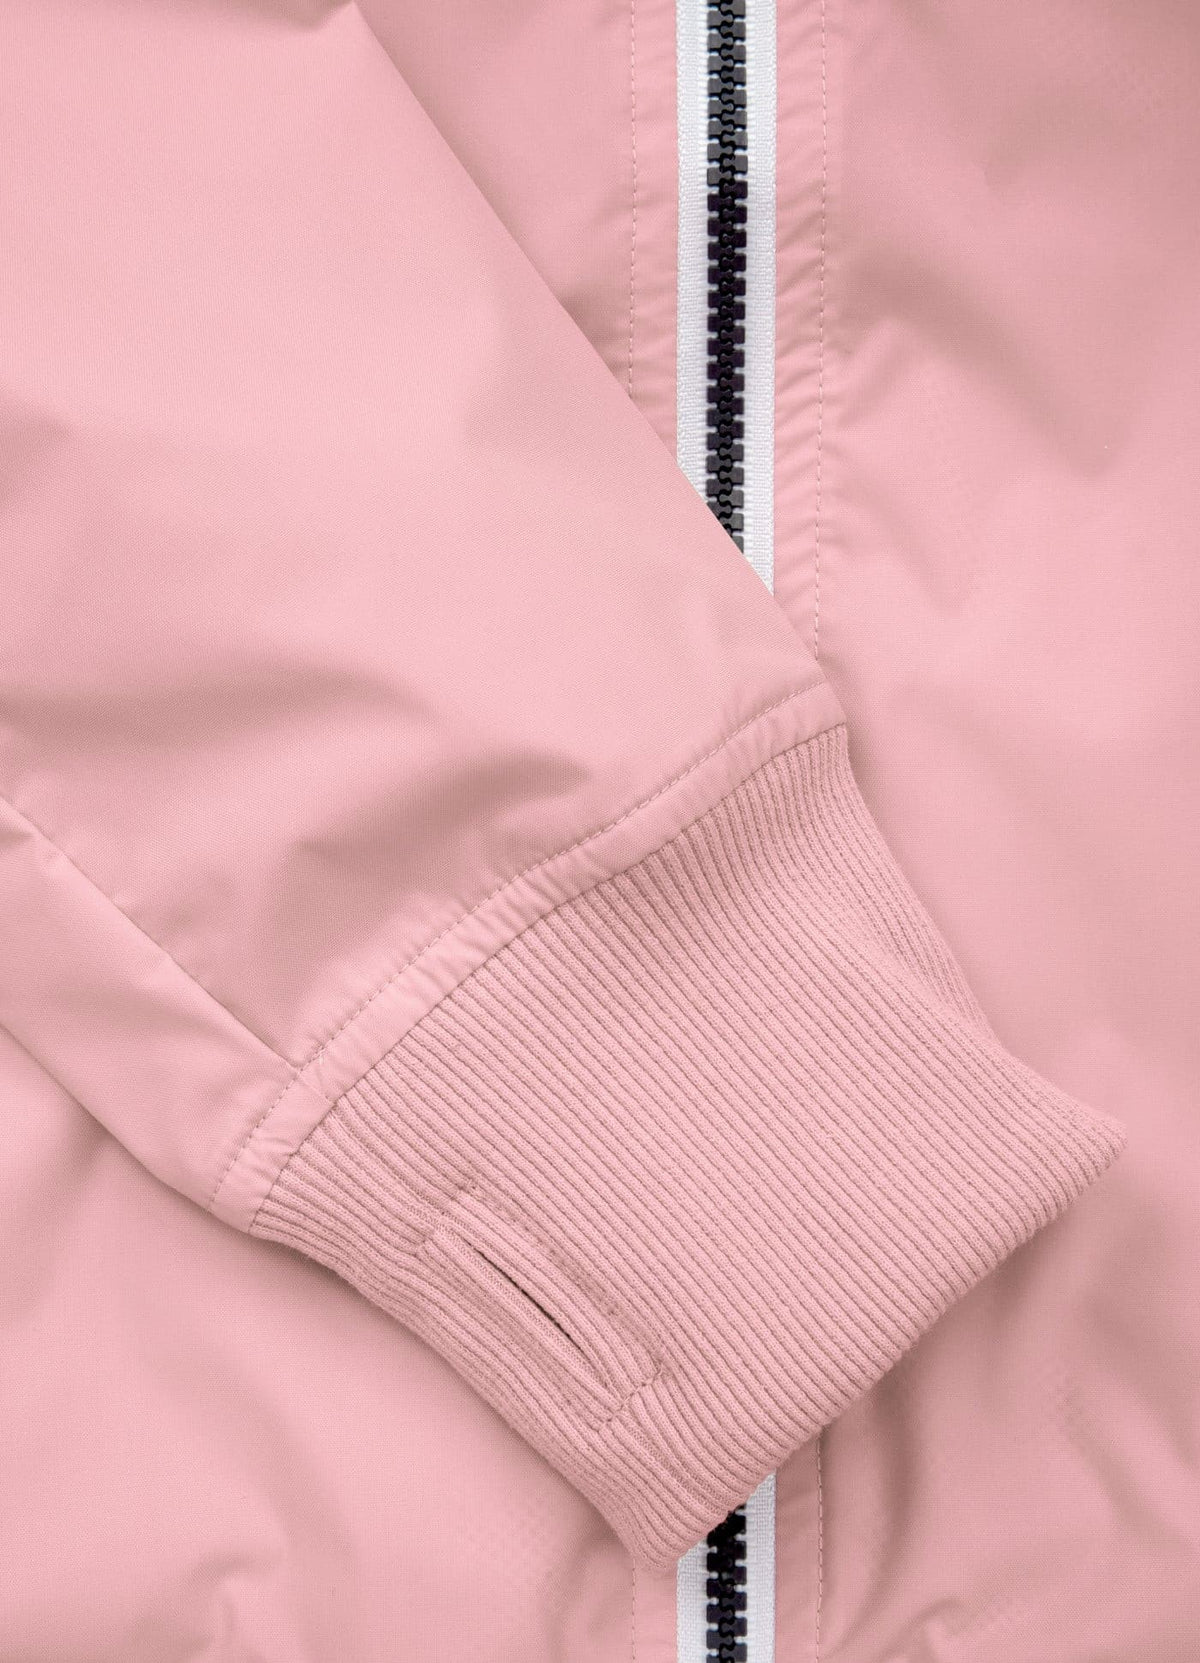 AARICIA Pink Hooded Nylon Jacket.